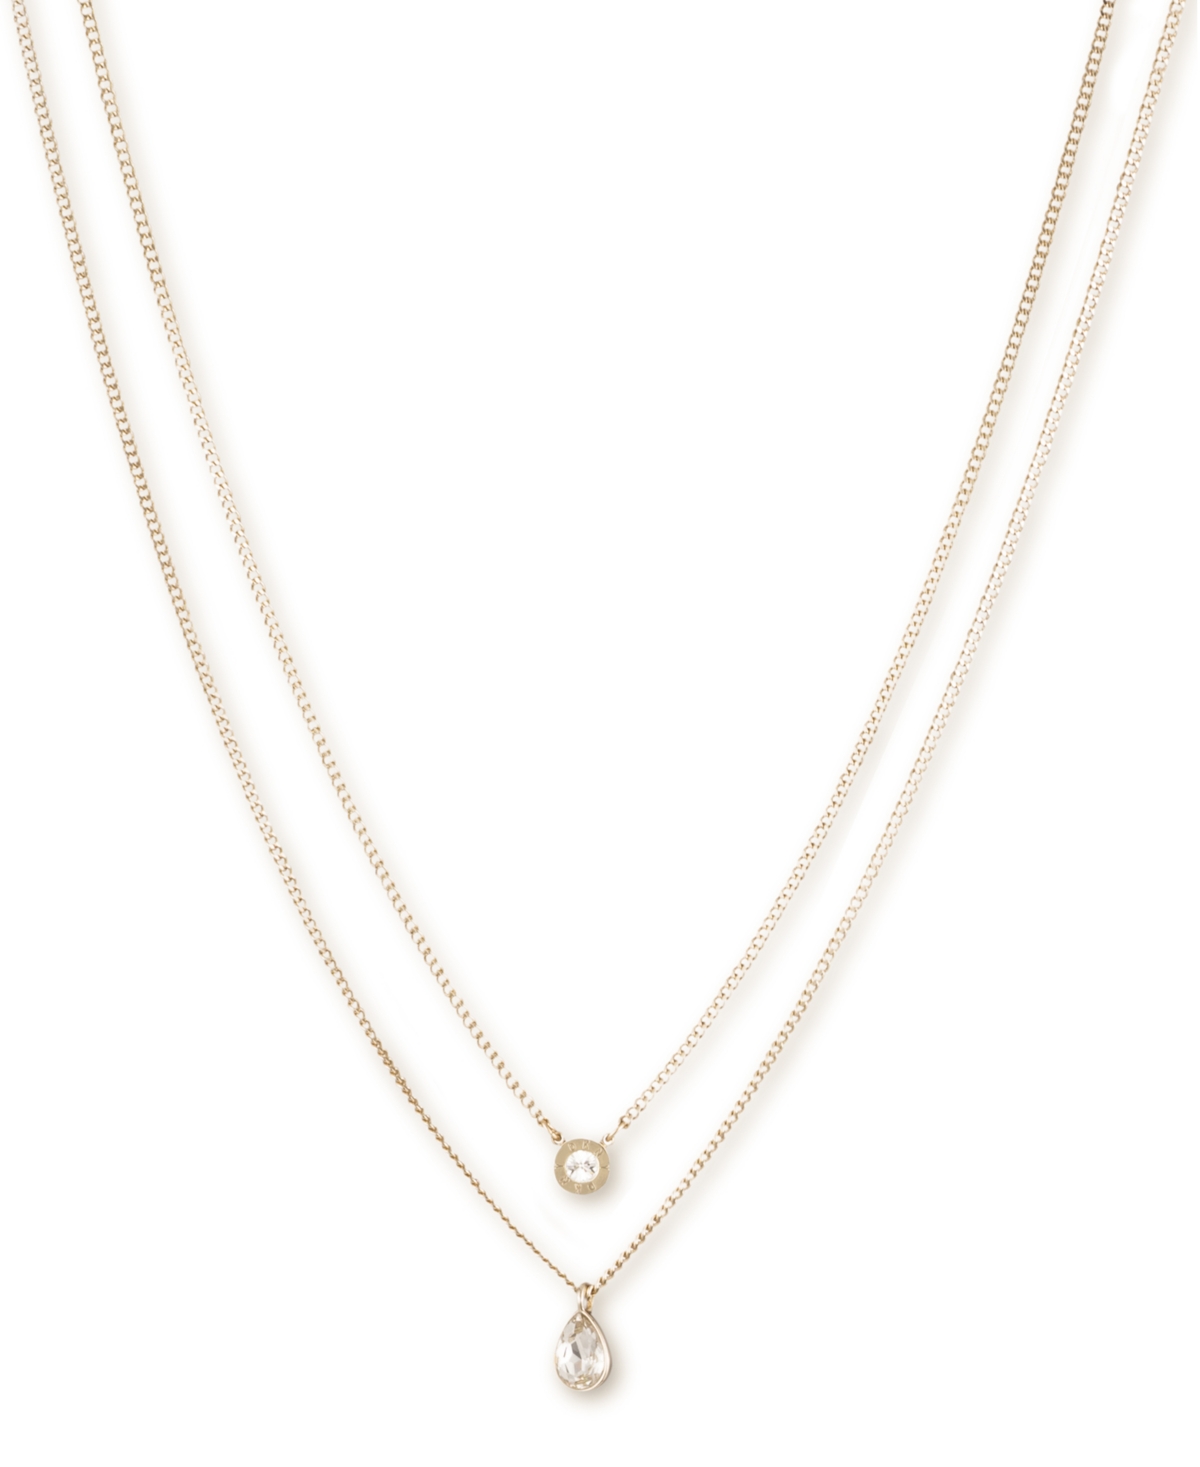 Double Row Pendant Necklace, 16" long + 3" Extender - Silver